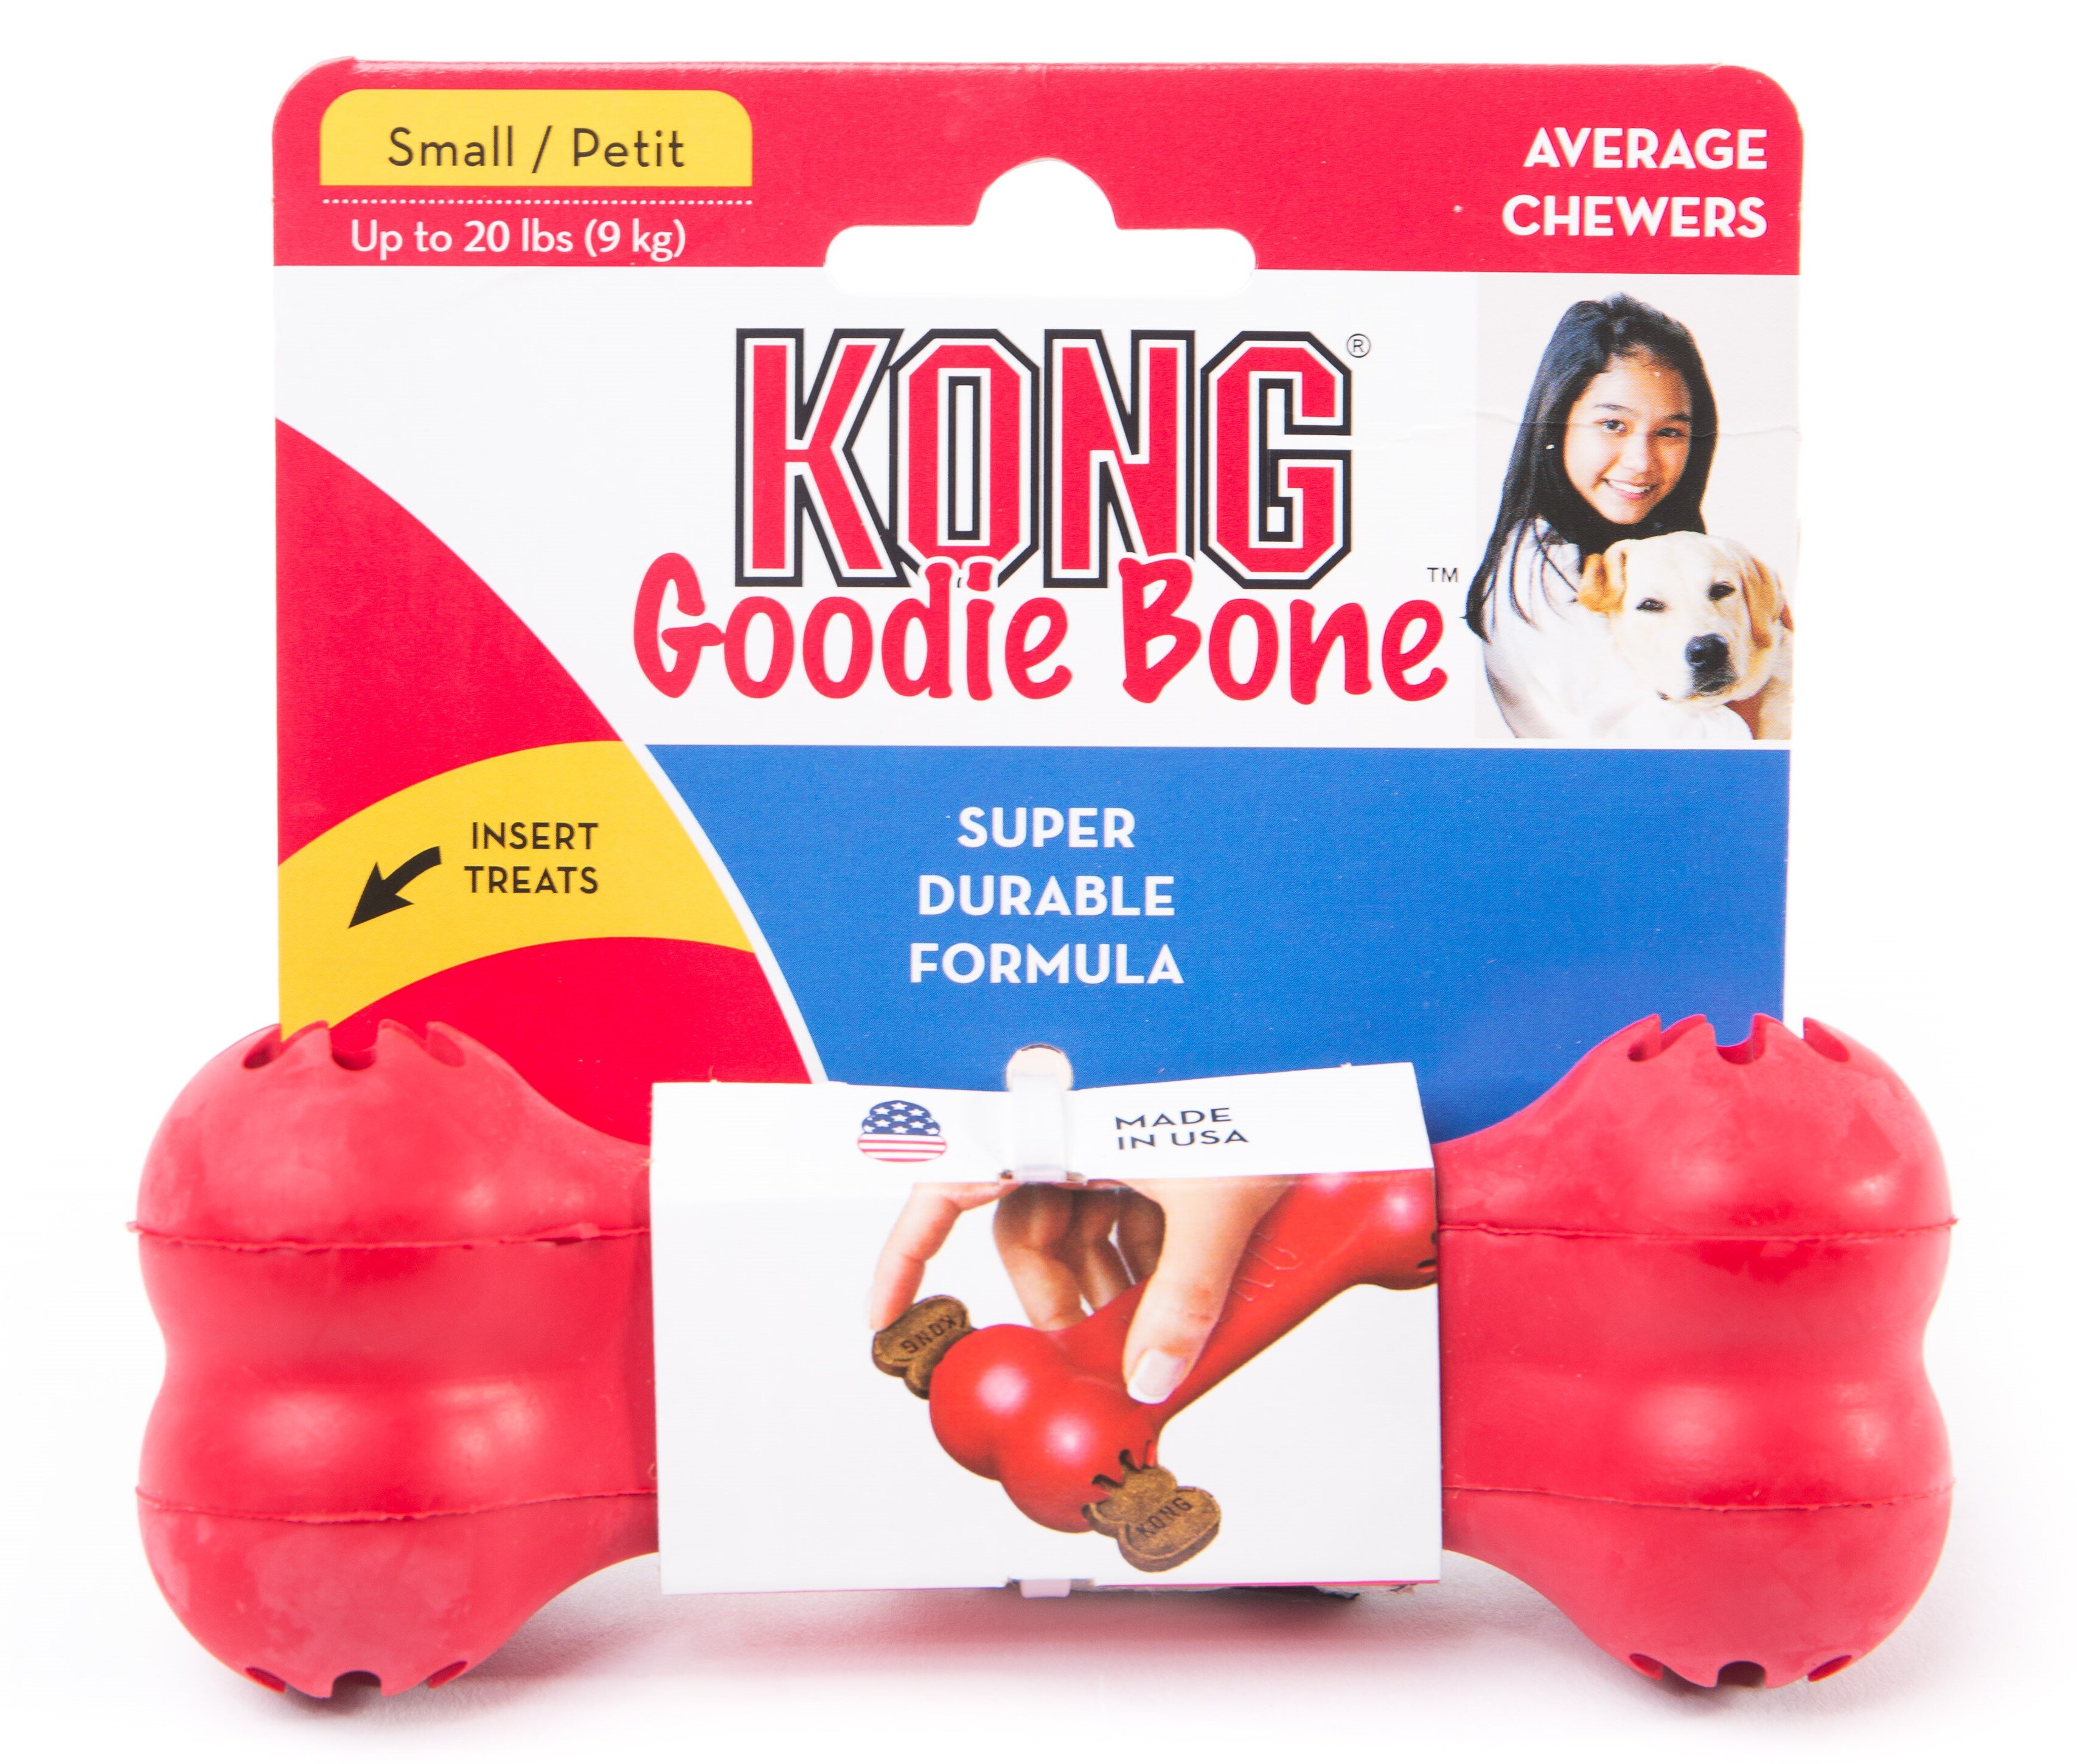 kong goodie bone